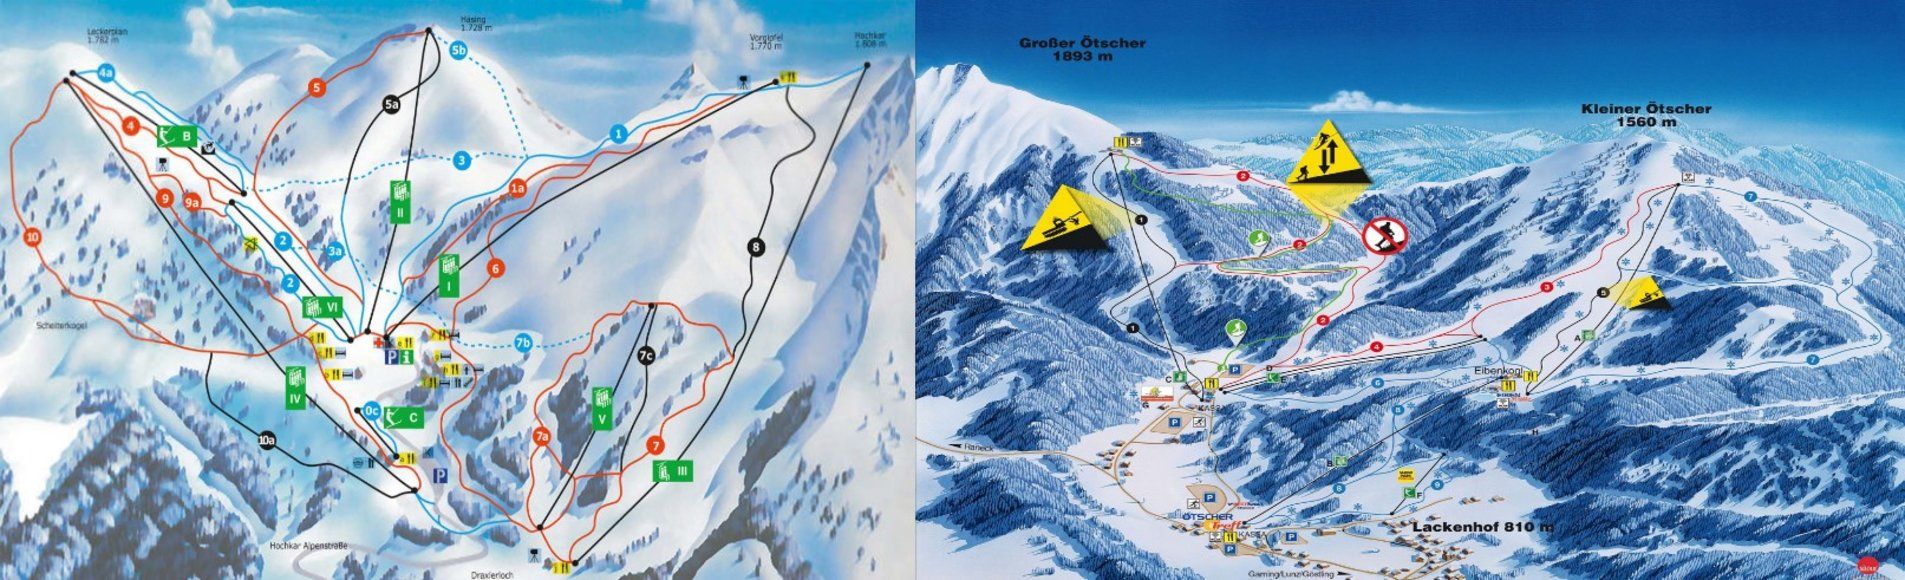 Pistenplan / Karte Skigebiet Göstling an der Ybbs, 